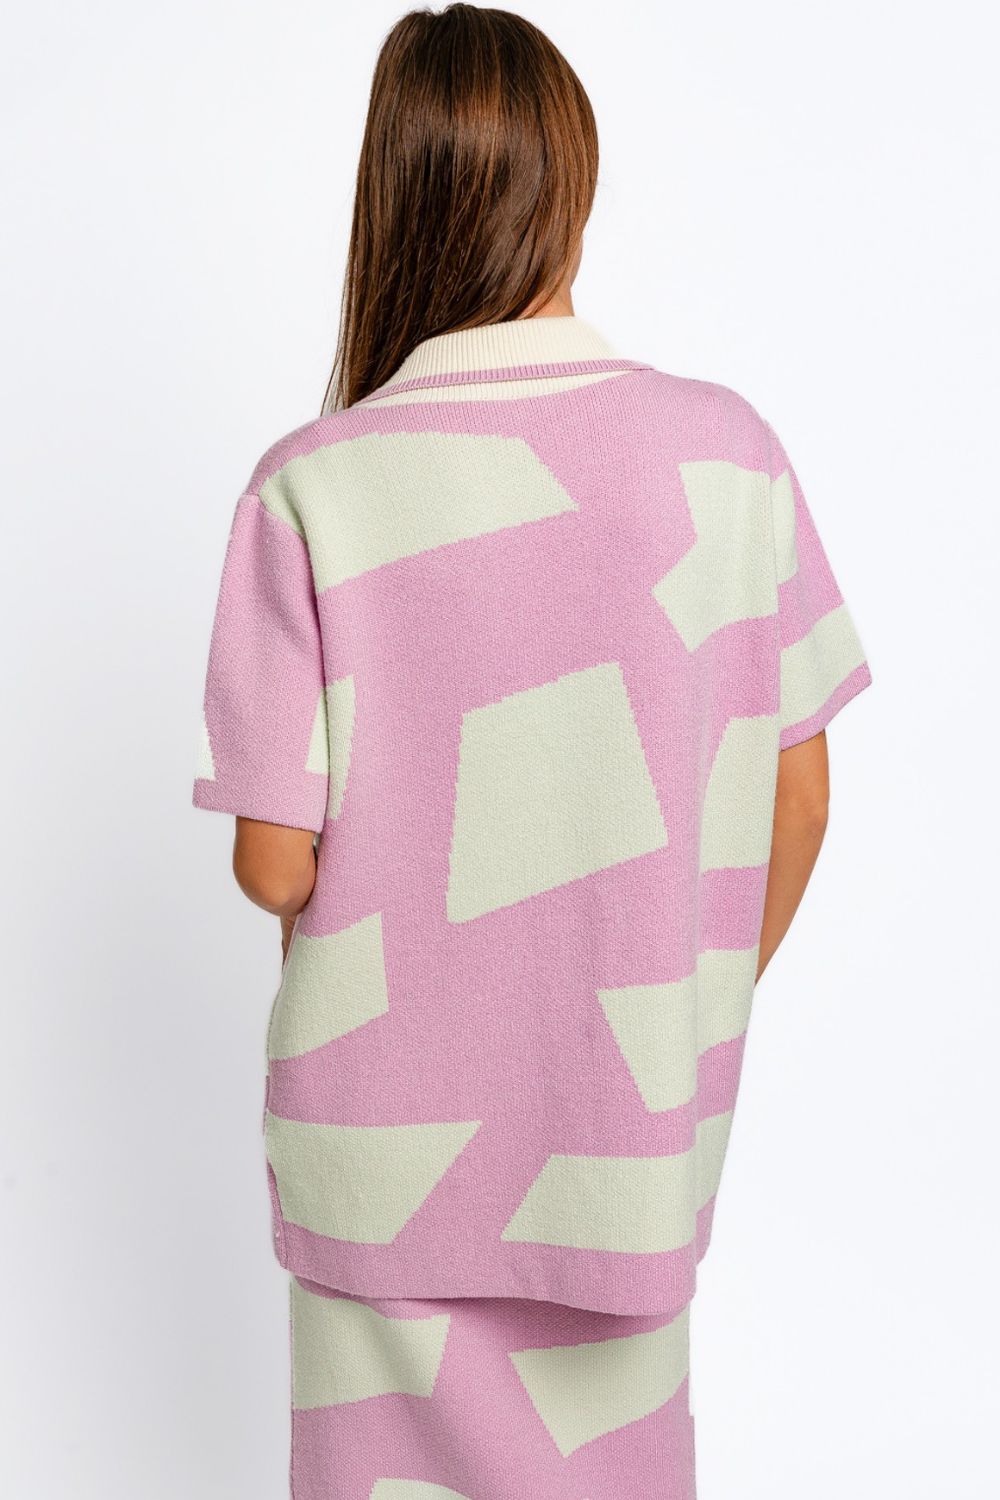 TEEK - Pink Mint Abstract Contrast Short Sleeve Collared Cardigan SWEATER TEEK Trend   